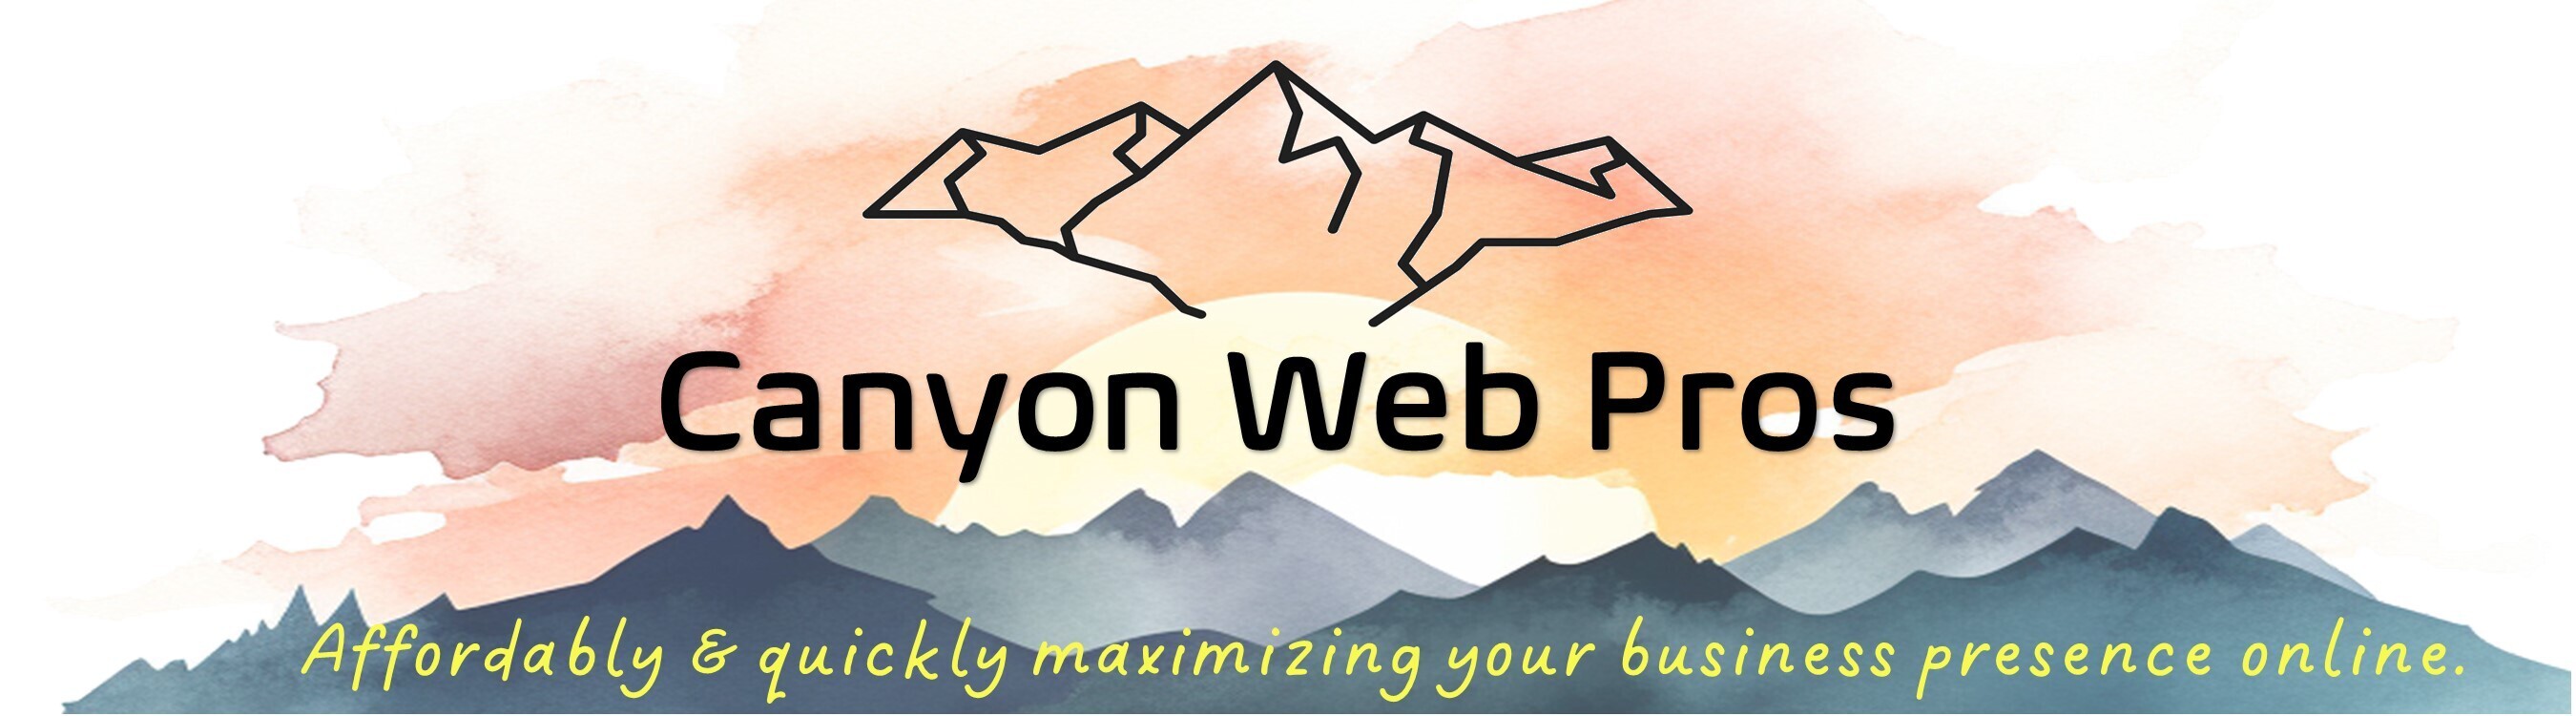 Canyon Web Pros